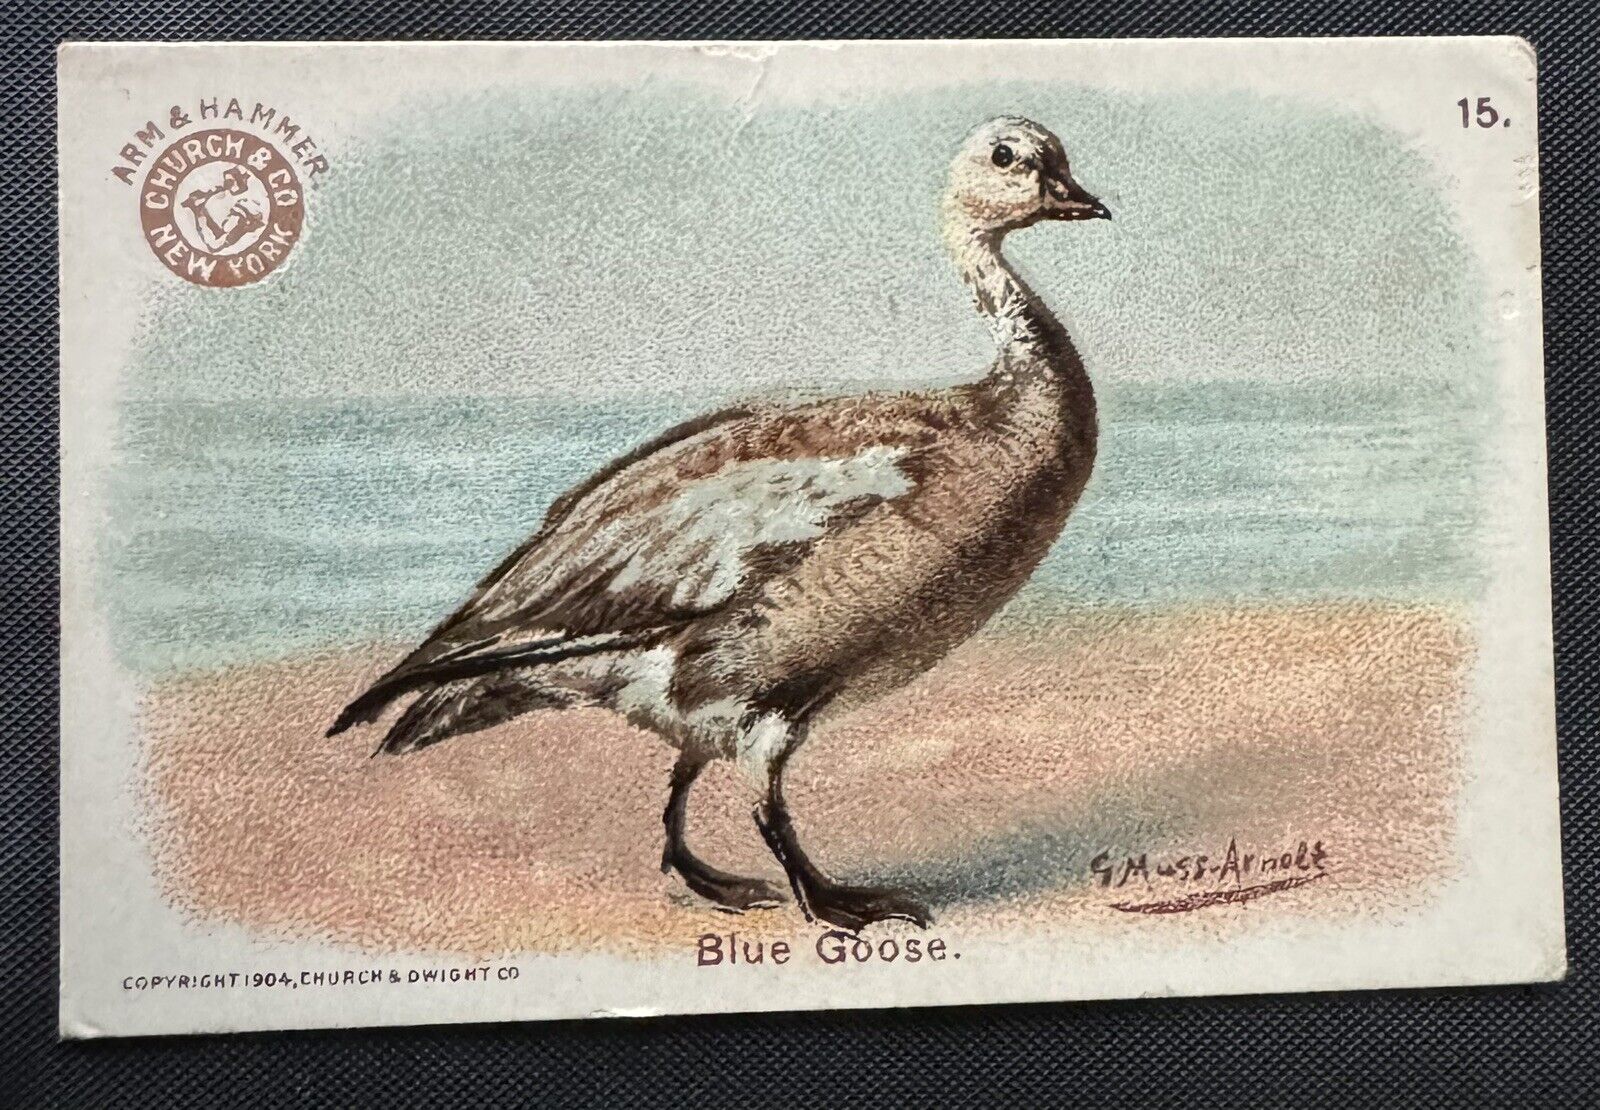 Vintage “Game Bird Series” (#15 Blue Goose) Small Card - Church & Dwight (1904)